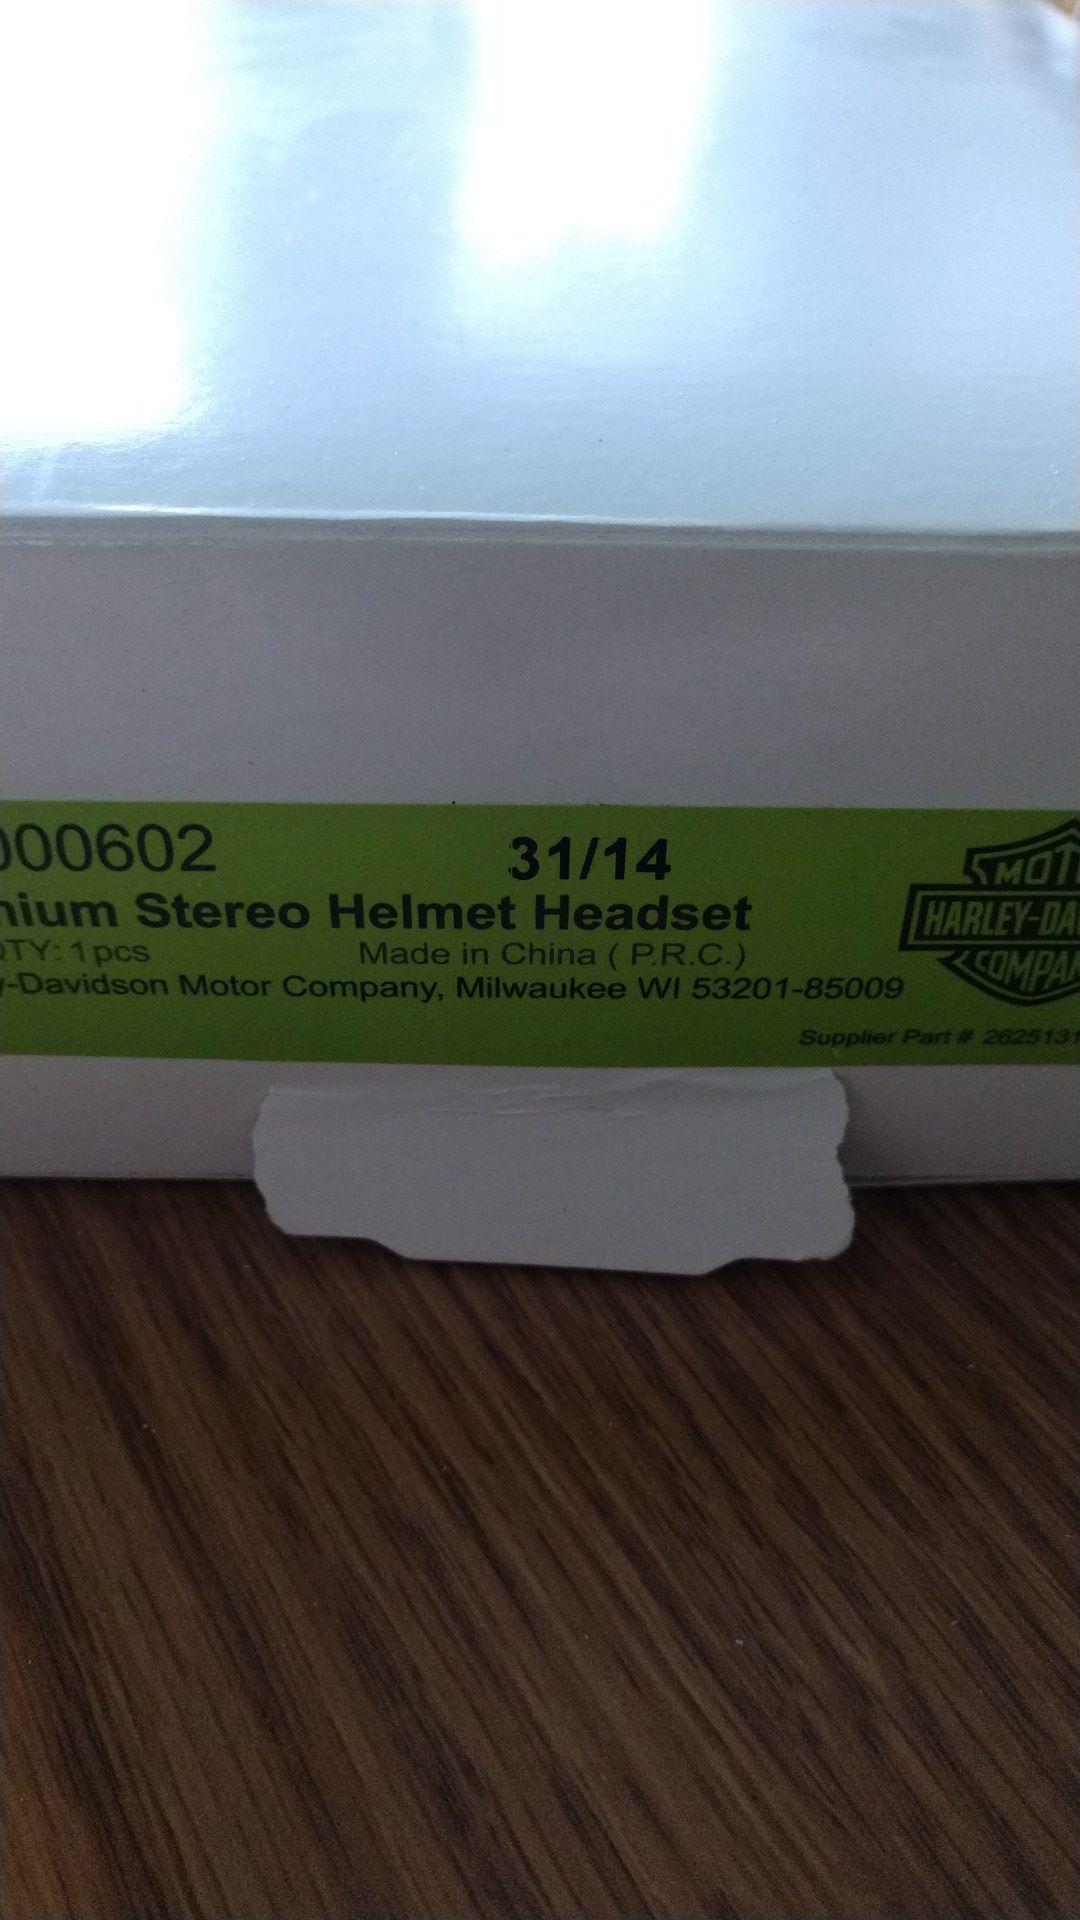 Harley Davidson Helmet Headset